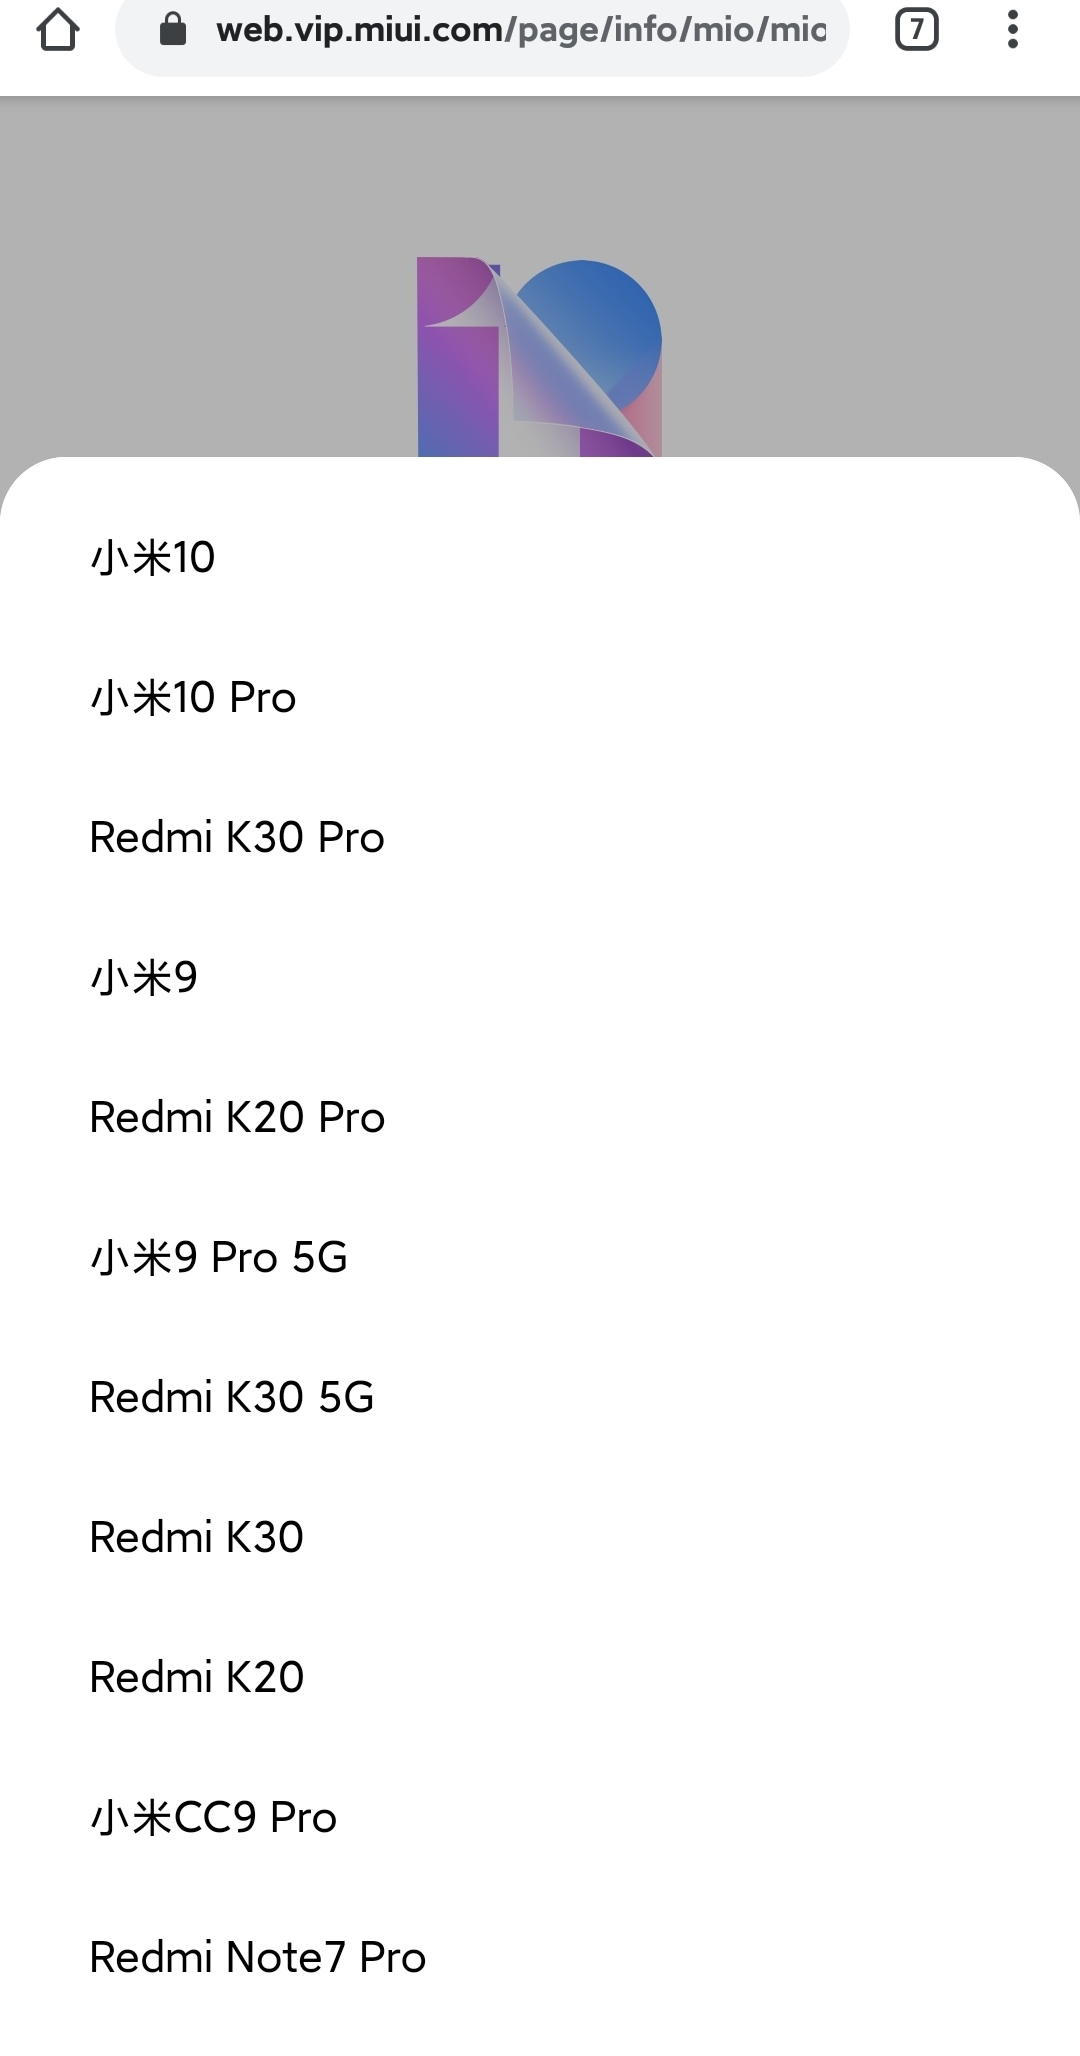 Official Xiaomi phones eligible for MIUI 12 Beta testing program